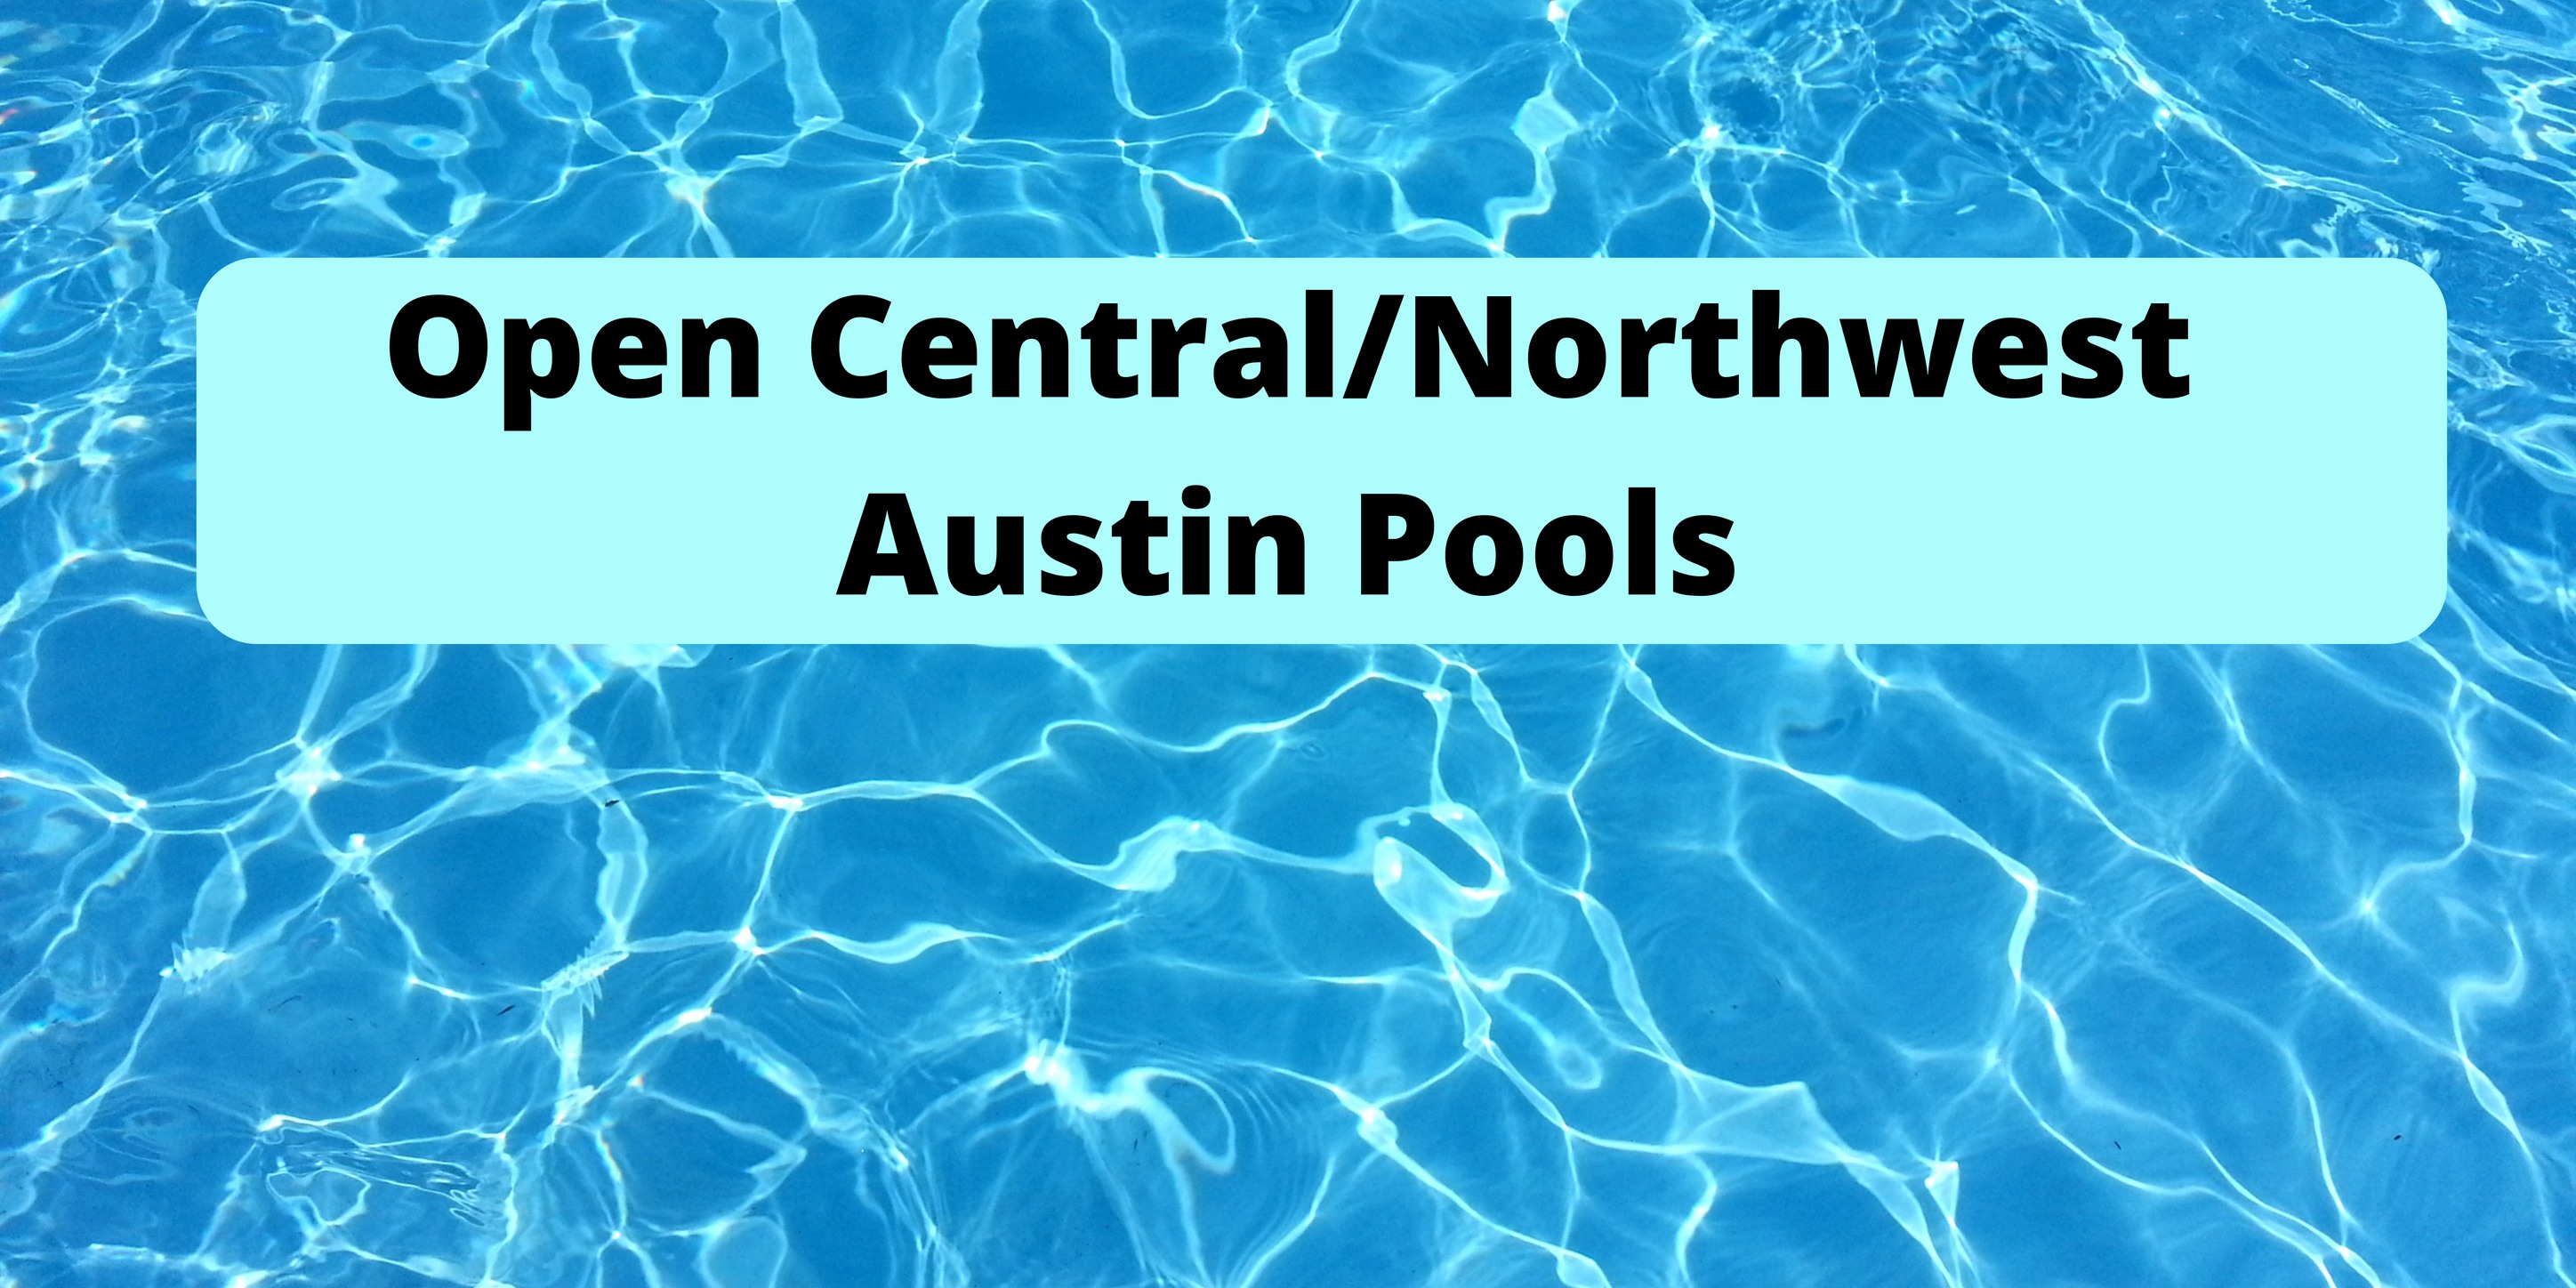 open central/northwest austin pools